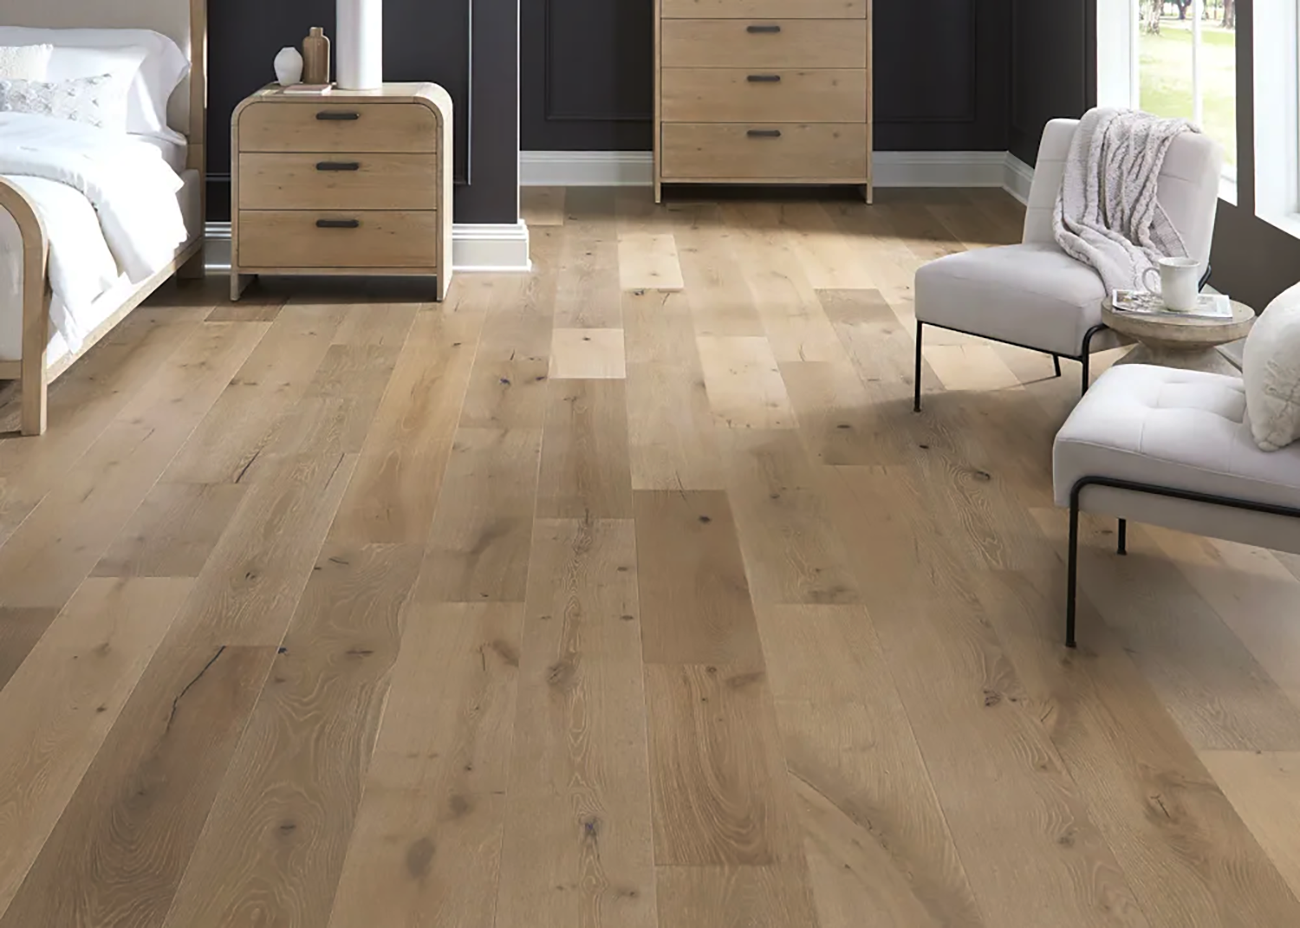 White Oak - Caramel Brown - Engineered Flooring - 9.5 inch wide plank